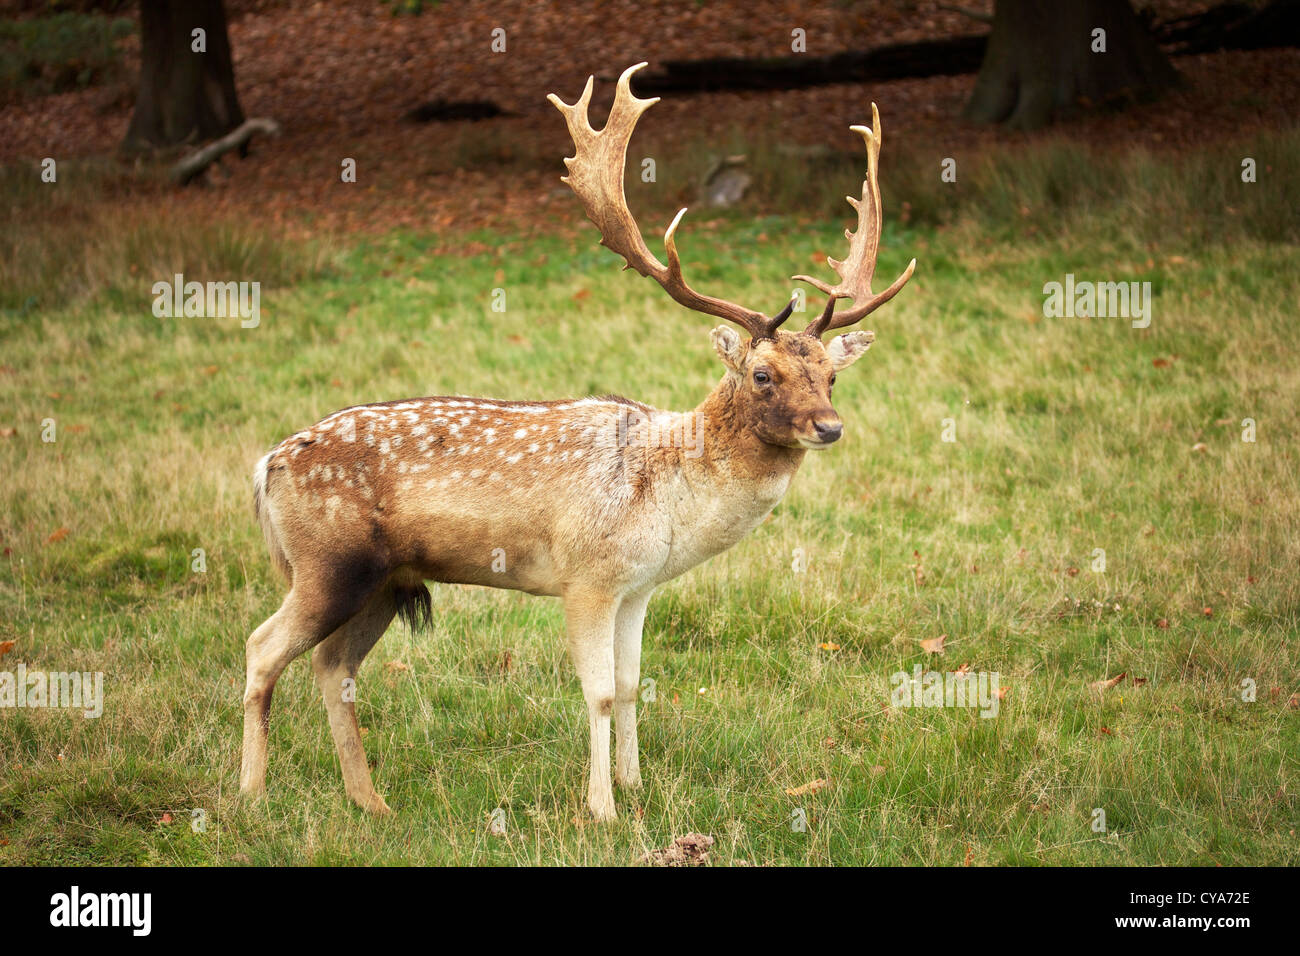 A male deer in Knole Park, Sevenoaks, Kent. UK Stock Photo